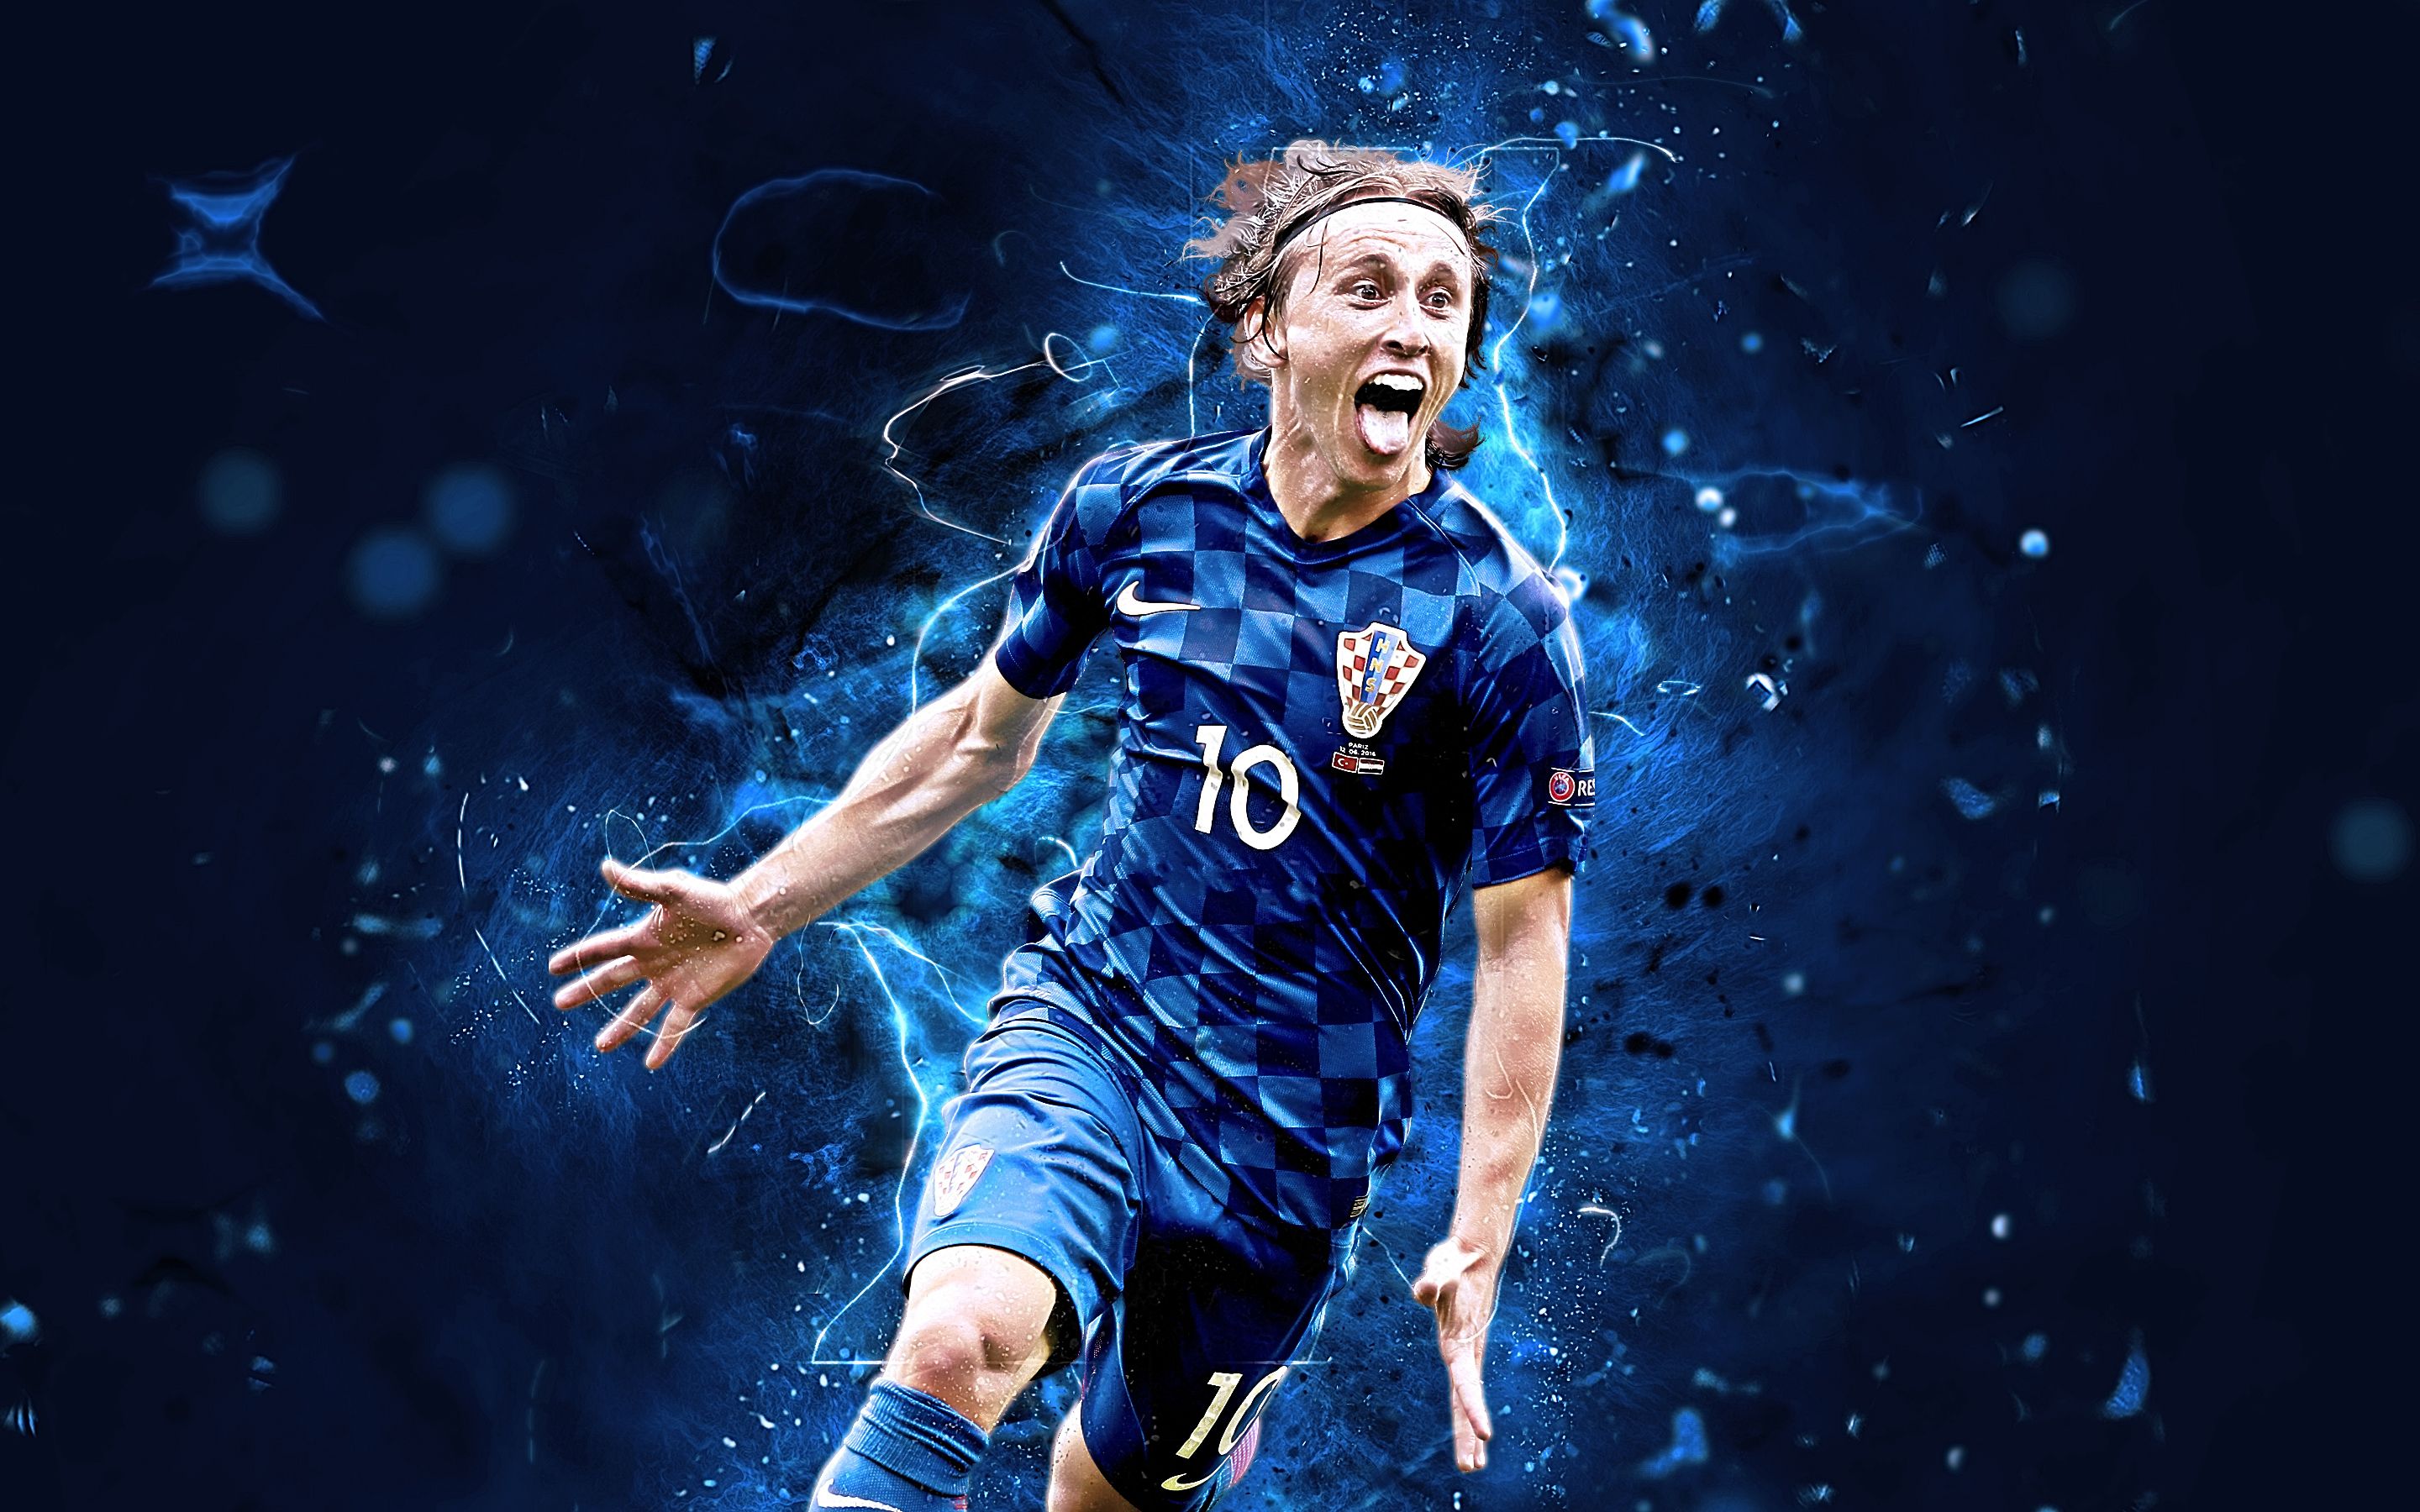 Luka Modric HD wallpaper, background